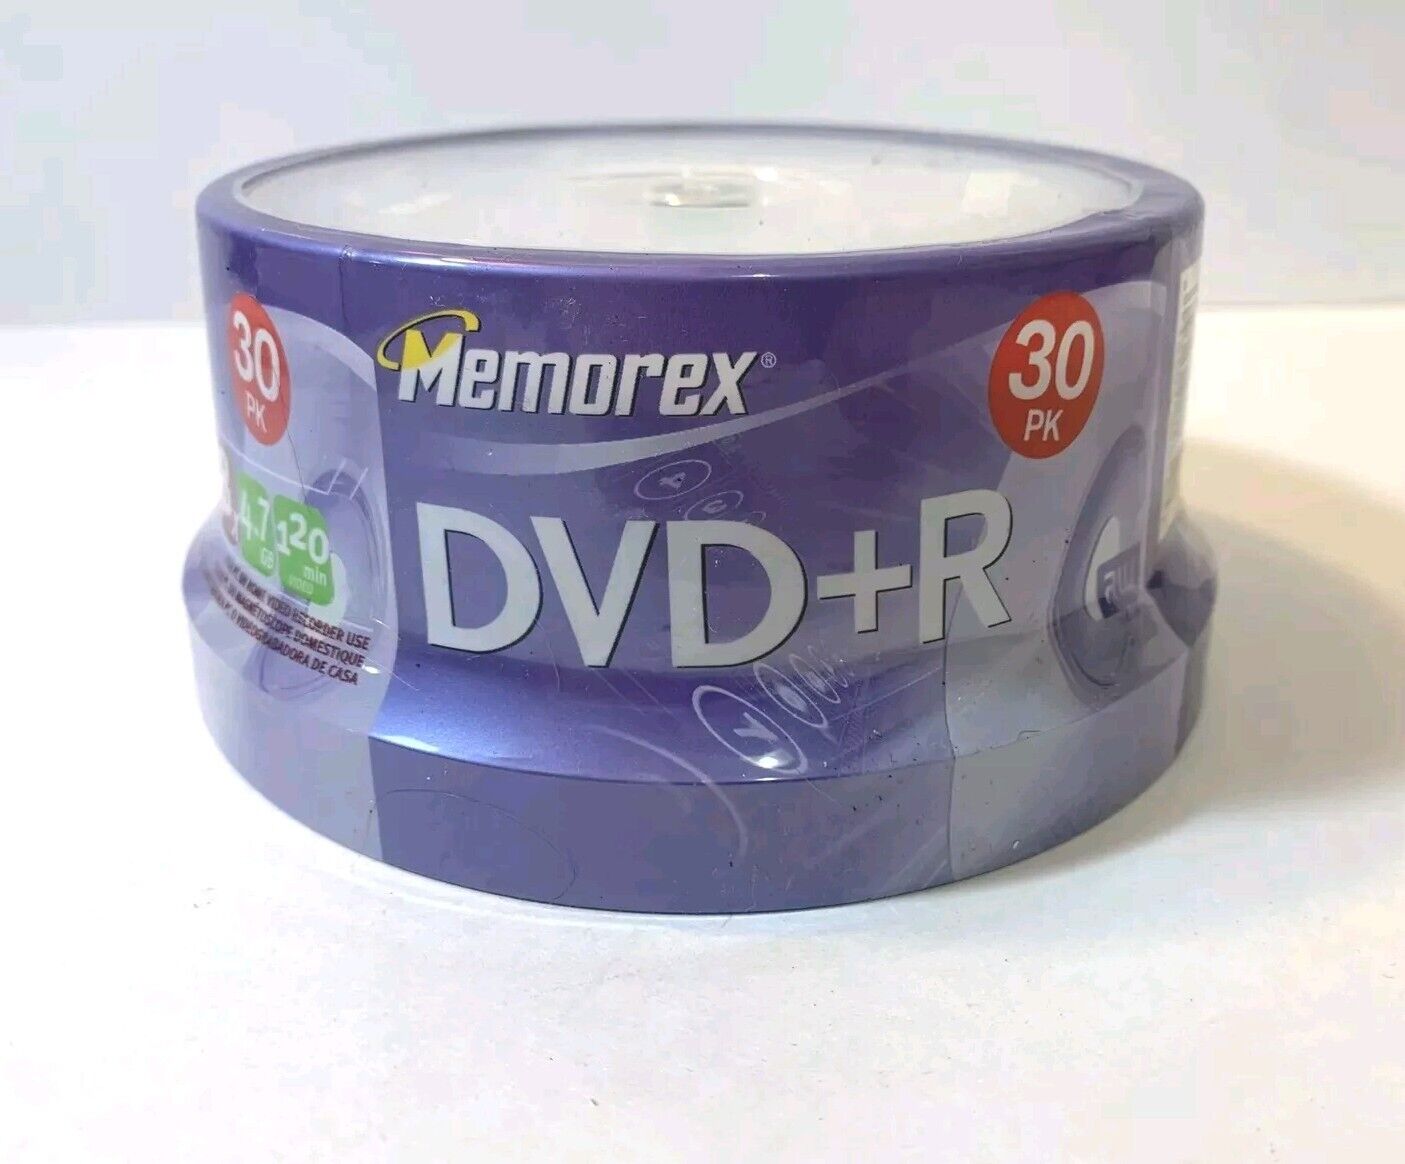 Memorex DVD+R 30 Pack 120 Minute 4.7 GB 8x New Sealed